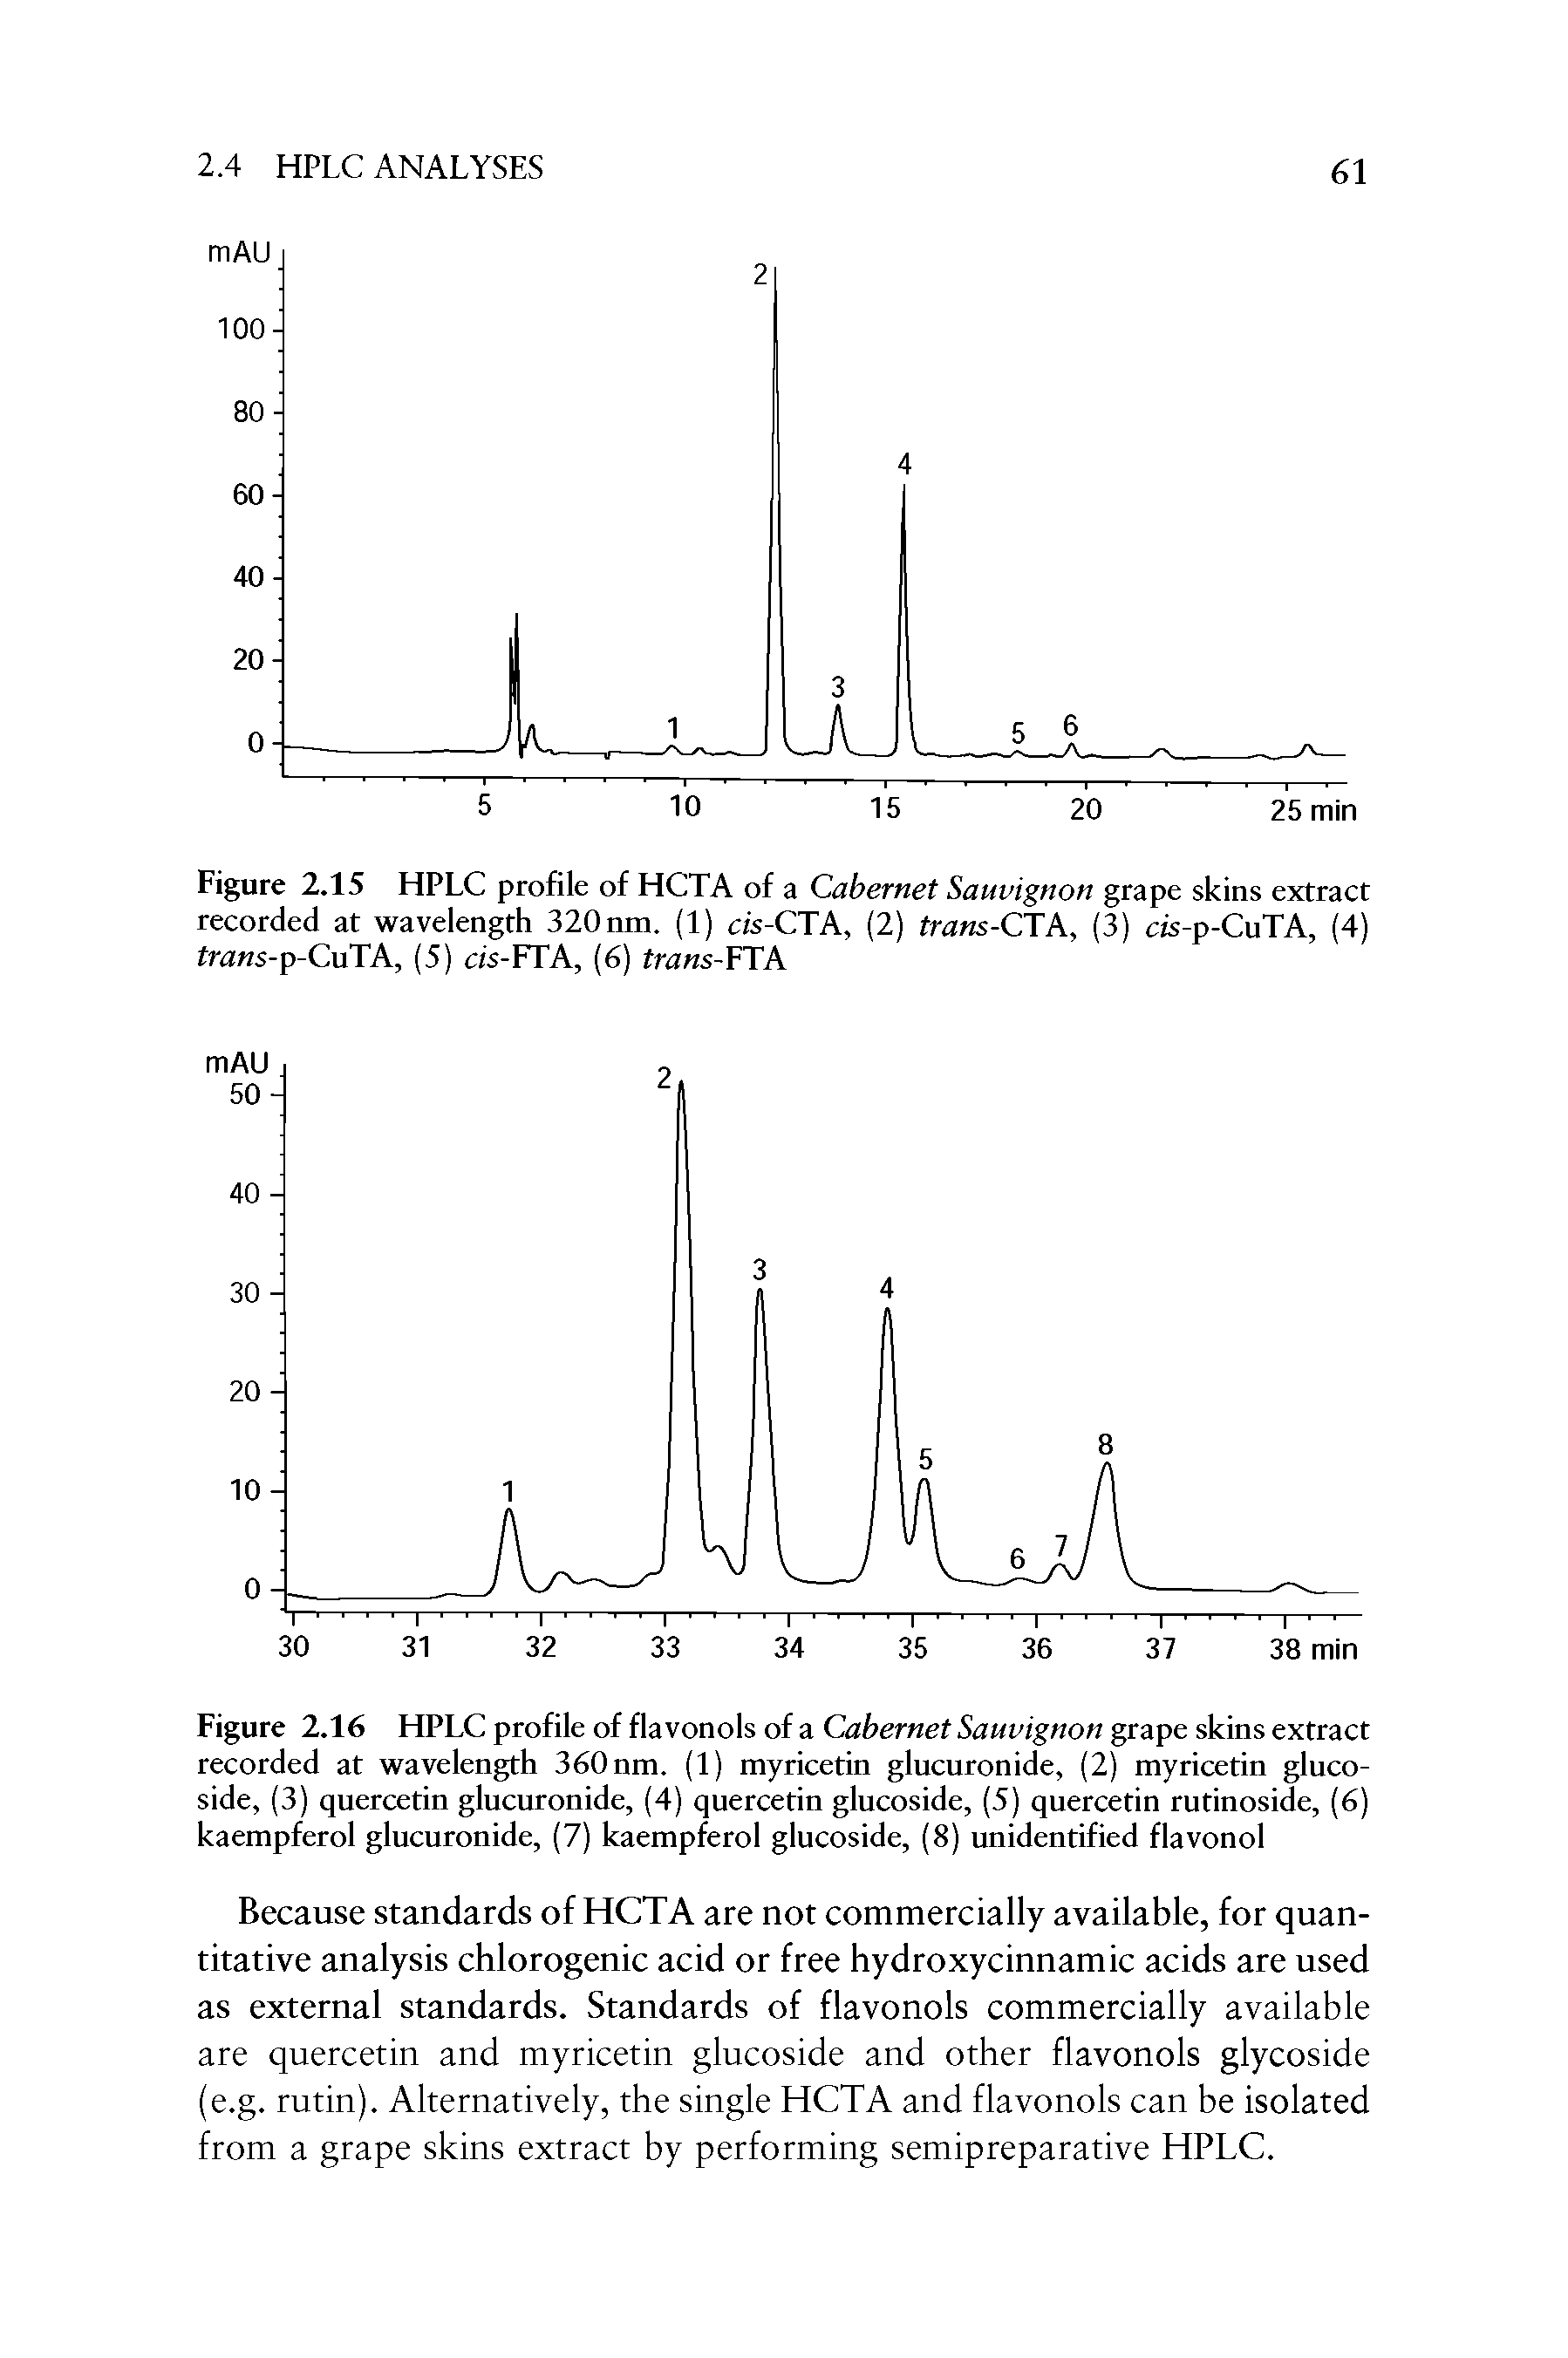 Figure 2.16 HPLC profile of flavonols of a Cabernet Sauvignon grape skins extract recorded at wavelength 360nm. (1) myricetin glucuronide, (2) myricetin gluco-side, (3) quercetin glucuronide, (4) quercetin glucoside, (5) quercetin rutinoside, (6) kaempferol glucuronide, (7) kaempferol glucoside, (8) unidentified flavonol...